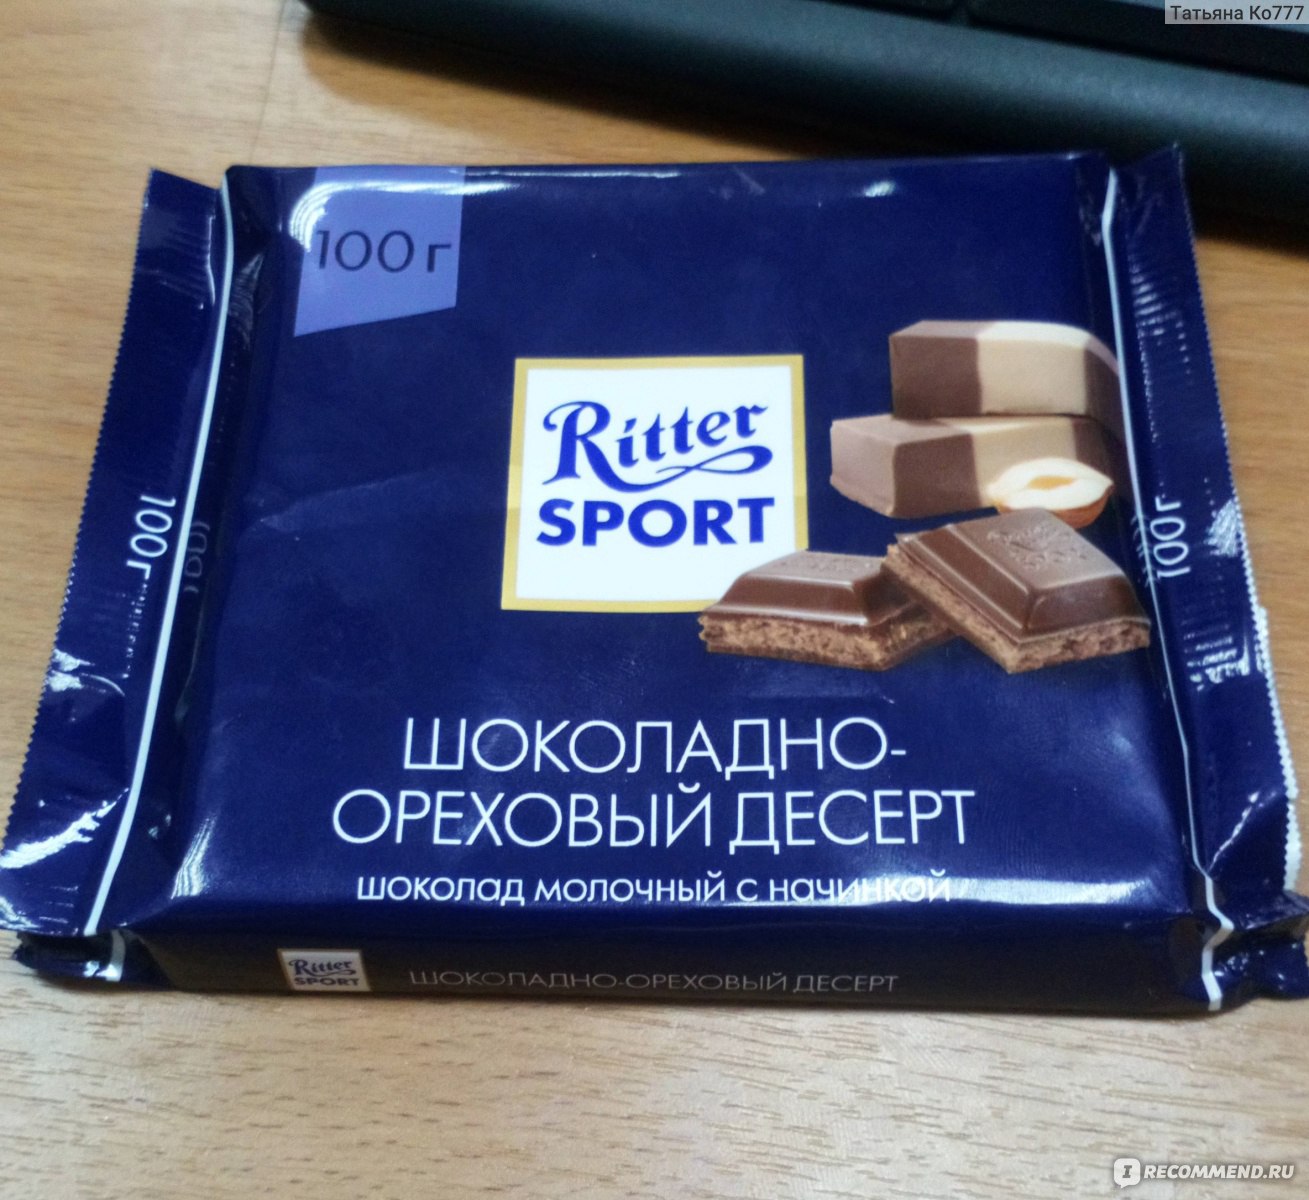 Шоколад Ореховый десерт Ritter Sport